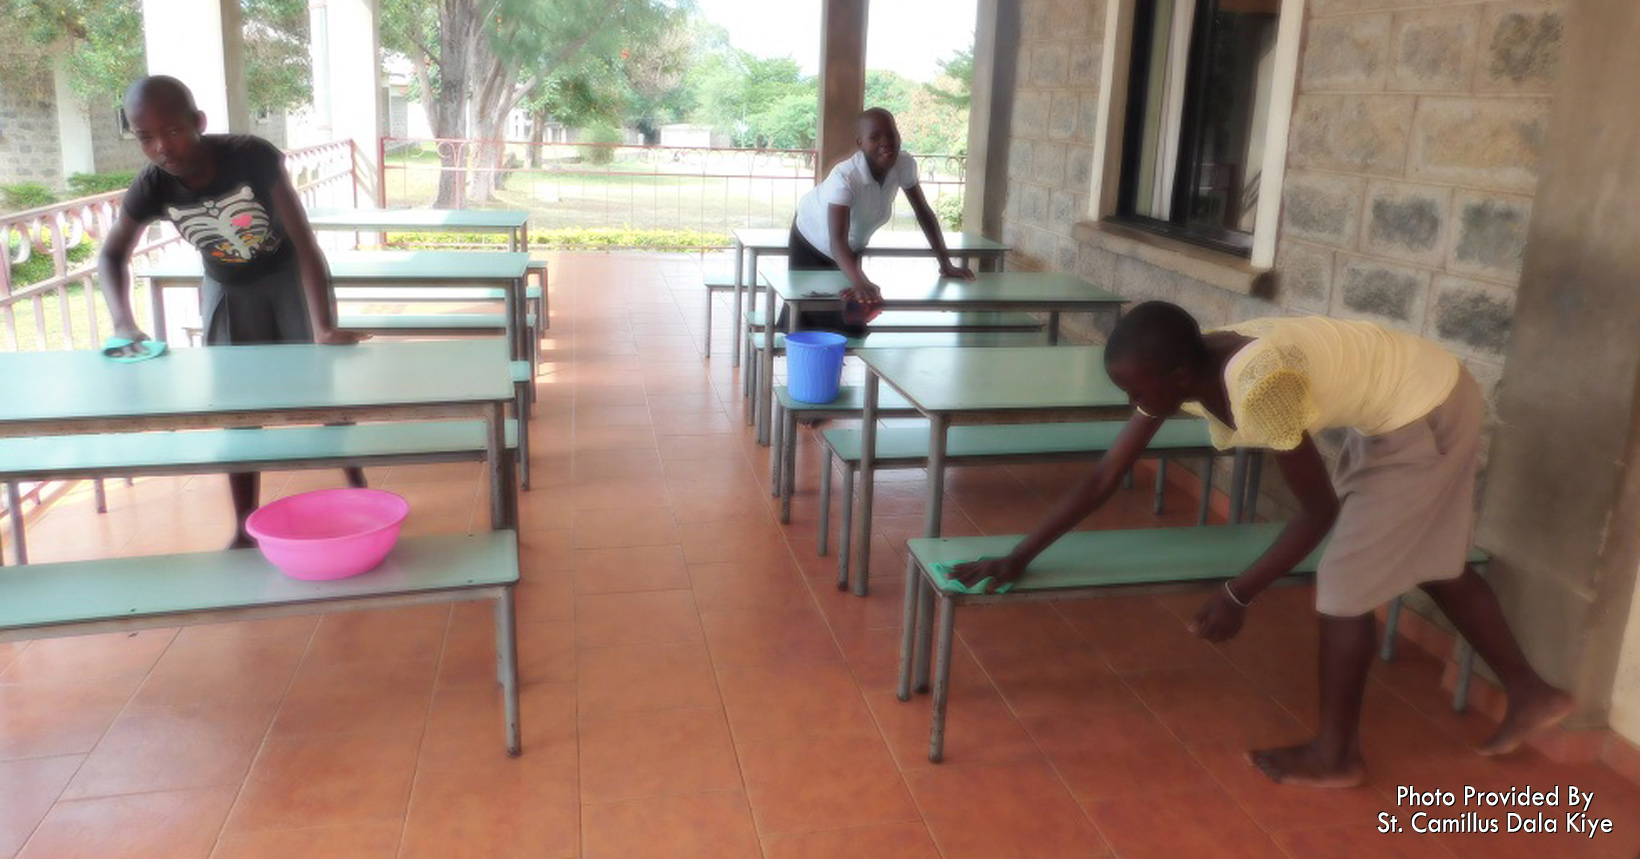 Girls clean the tables near their house as part of their chores.